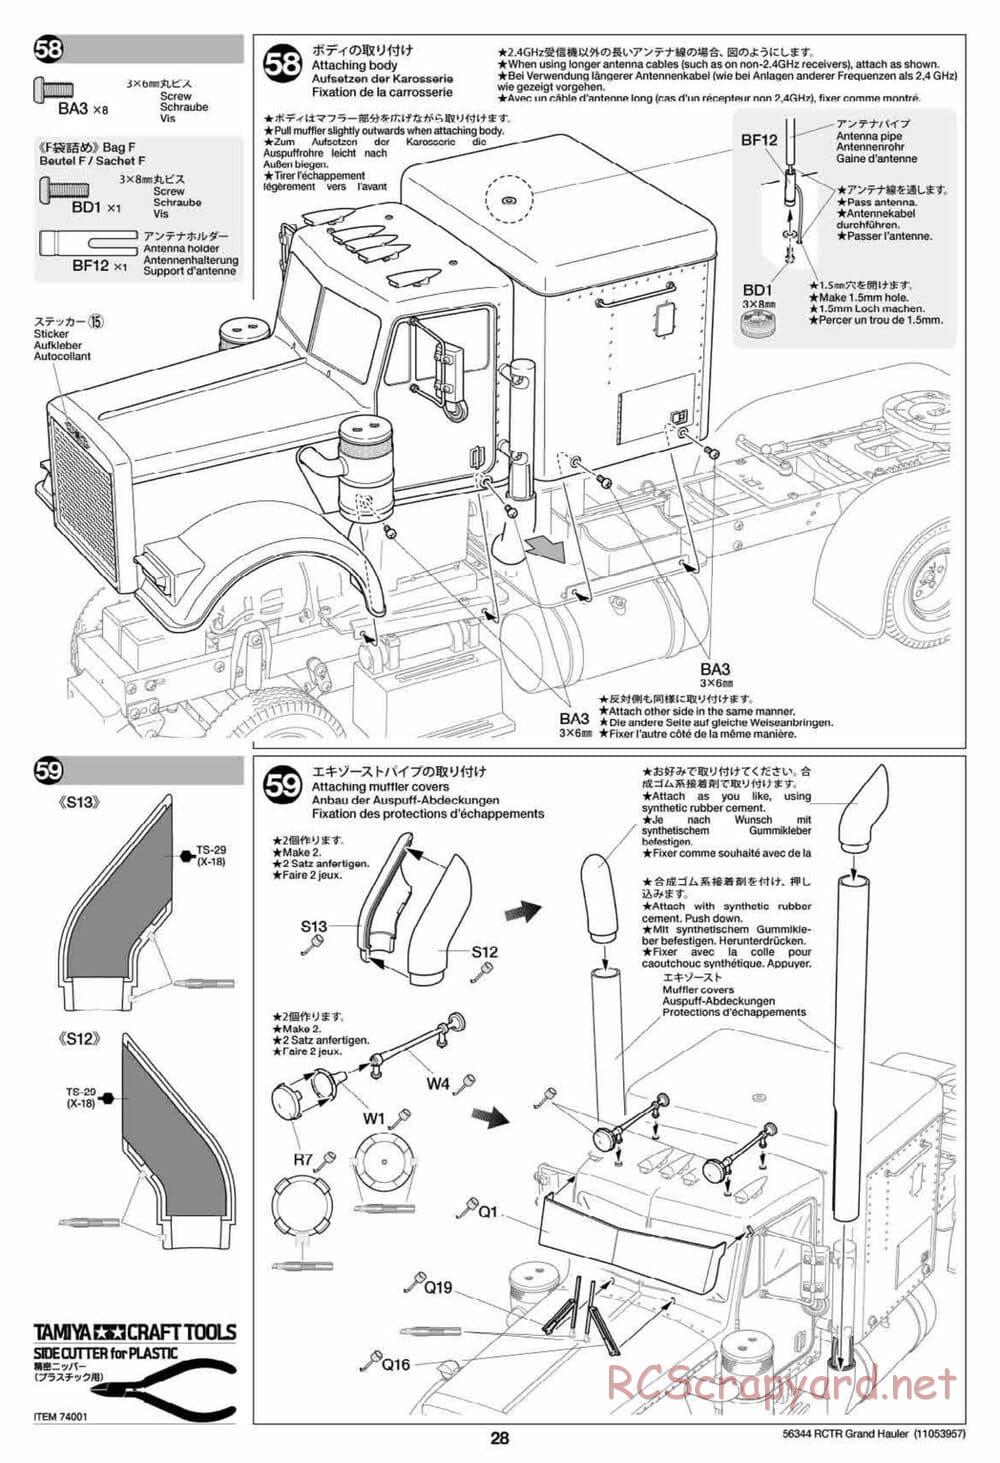 Tamiya - Grand Hauler Tractor Truck Chassis - Manual - Page 28